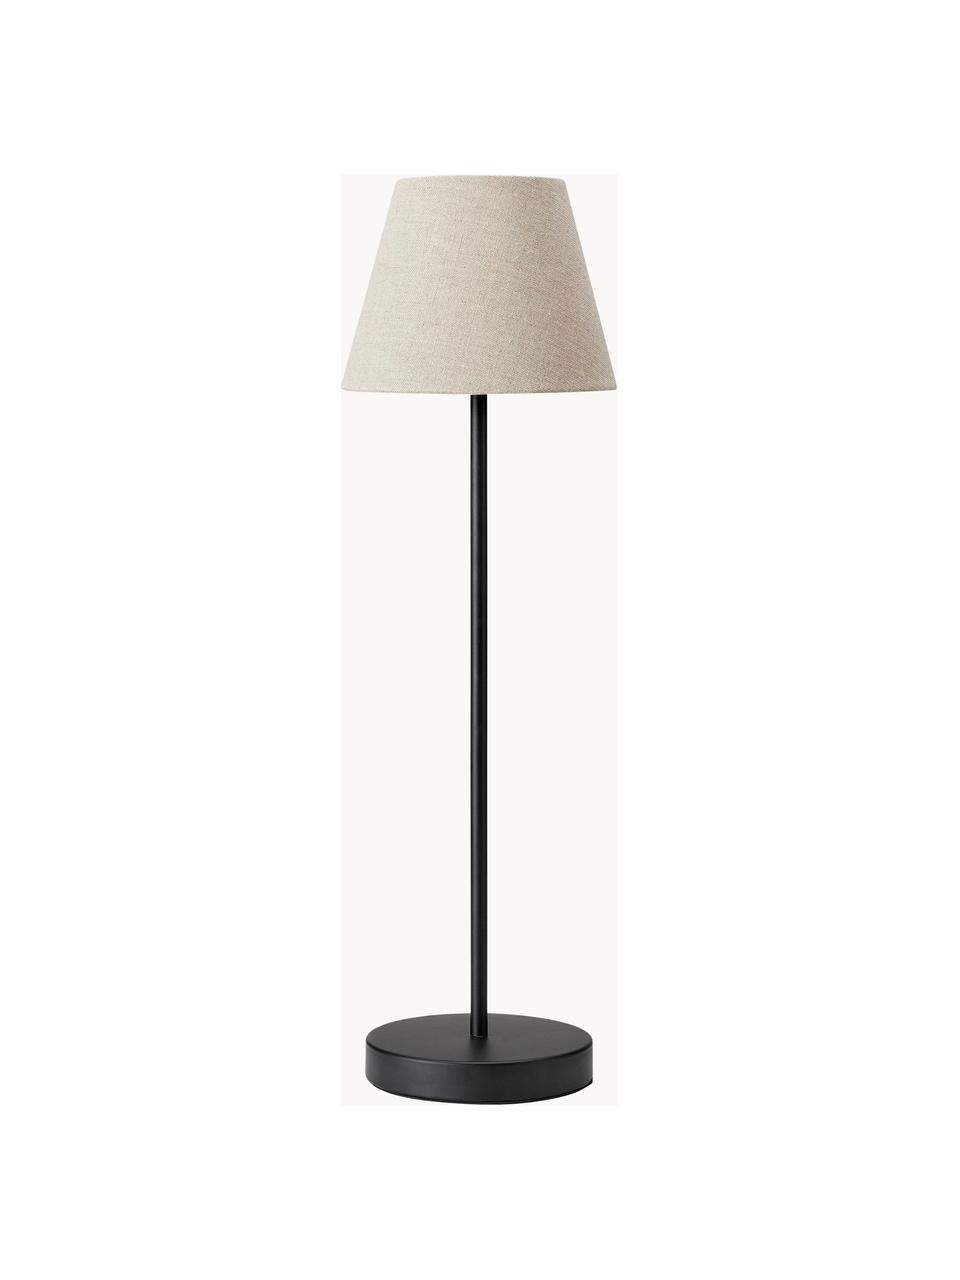 Grote tafellamp Cozy, Lampenkap: textiel, Beige, zwart, Ø 18 x H 63 cm